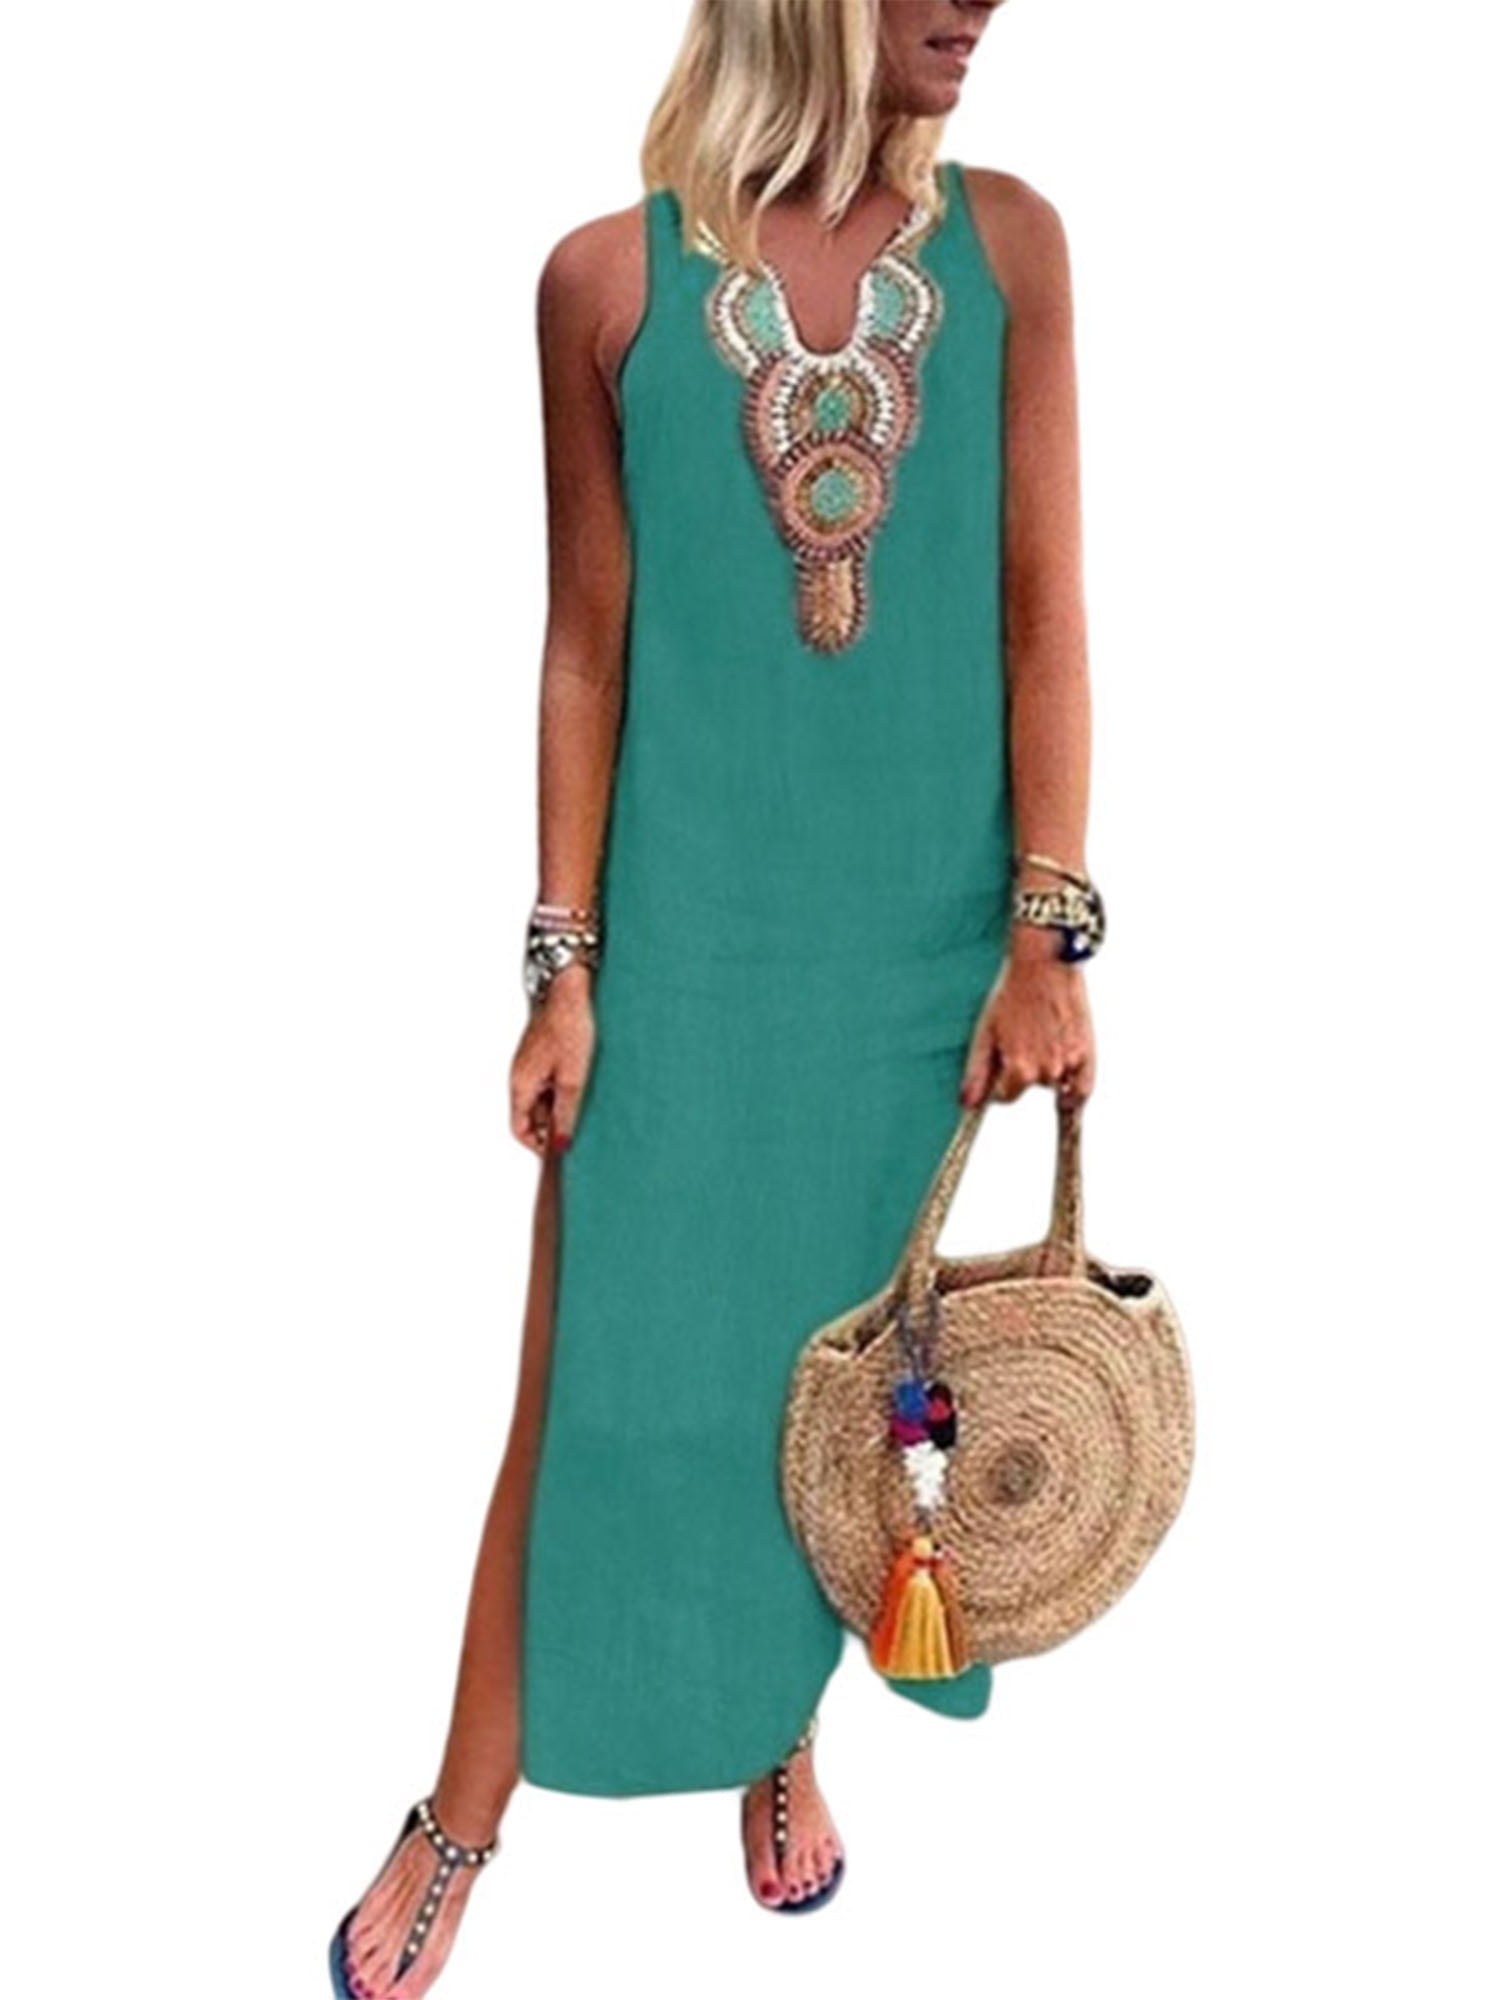 Moroccan Kaftan Caftan Beach Cover Up Summer Dress Casual Linen Sm-Lg Teal 